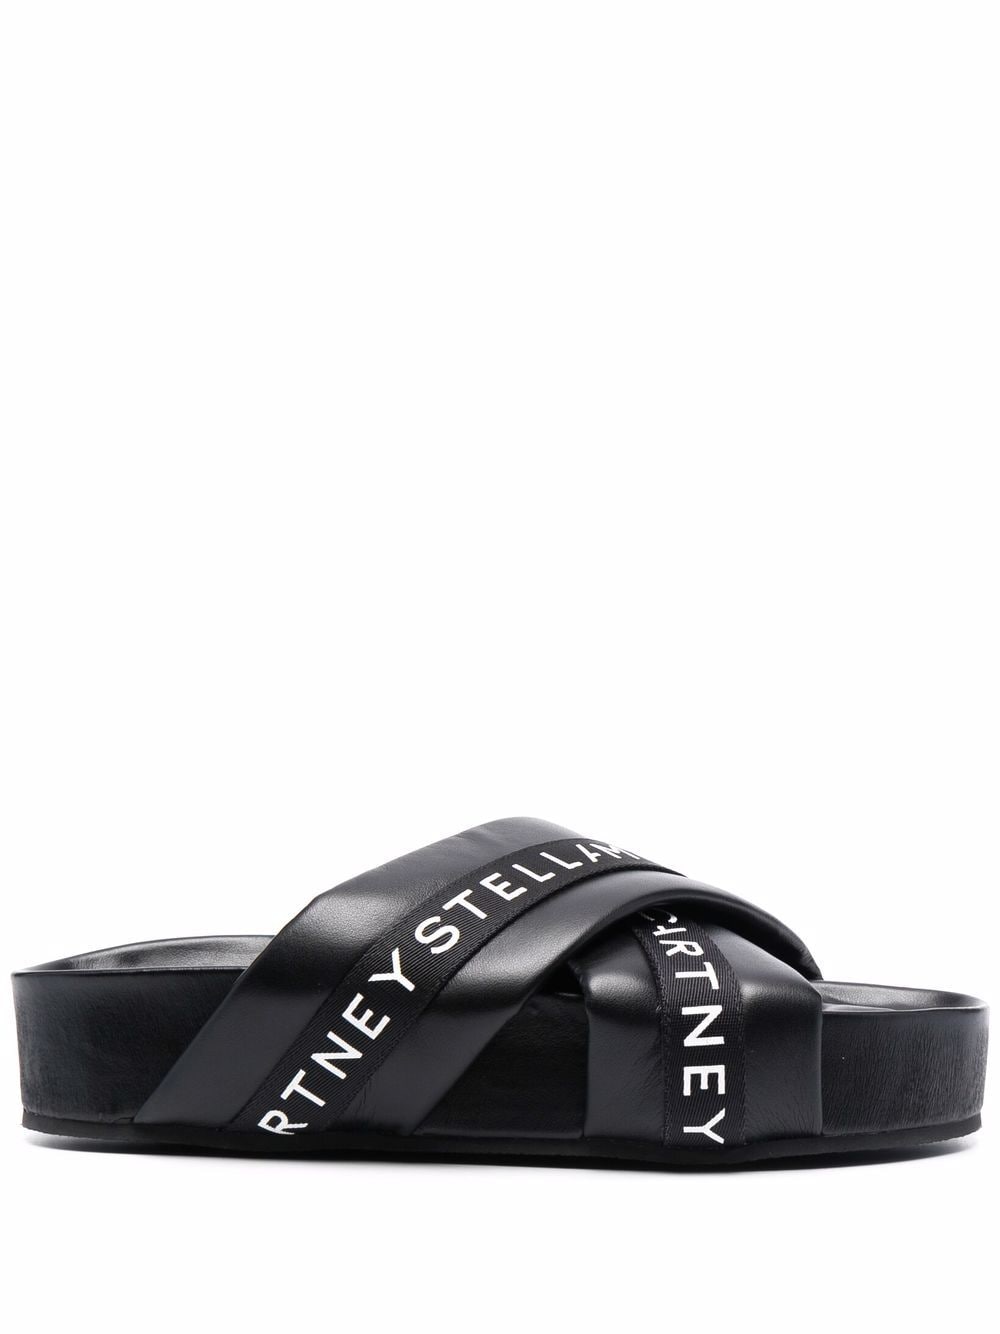 Stella McCartney logo tape platform sandals - Black